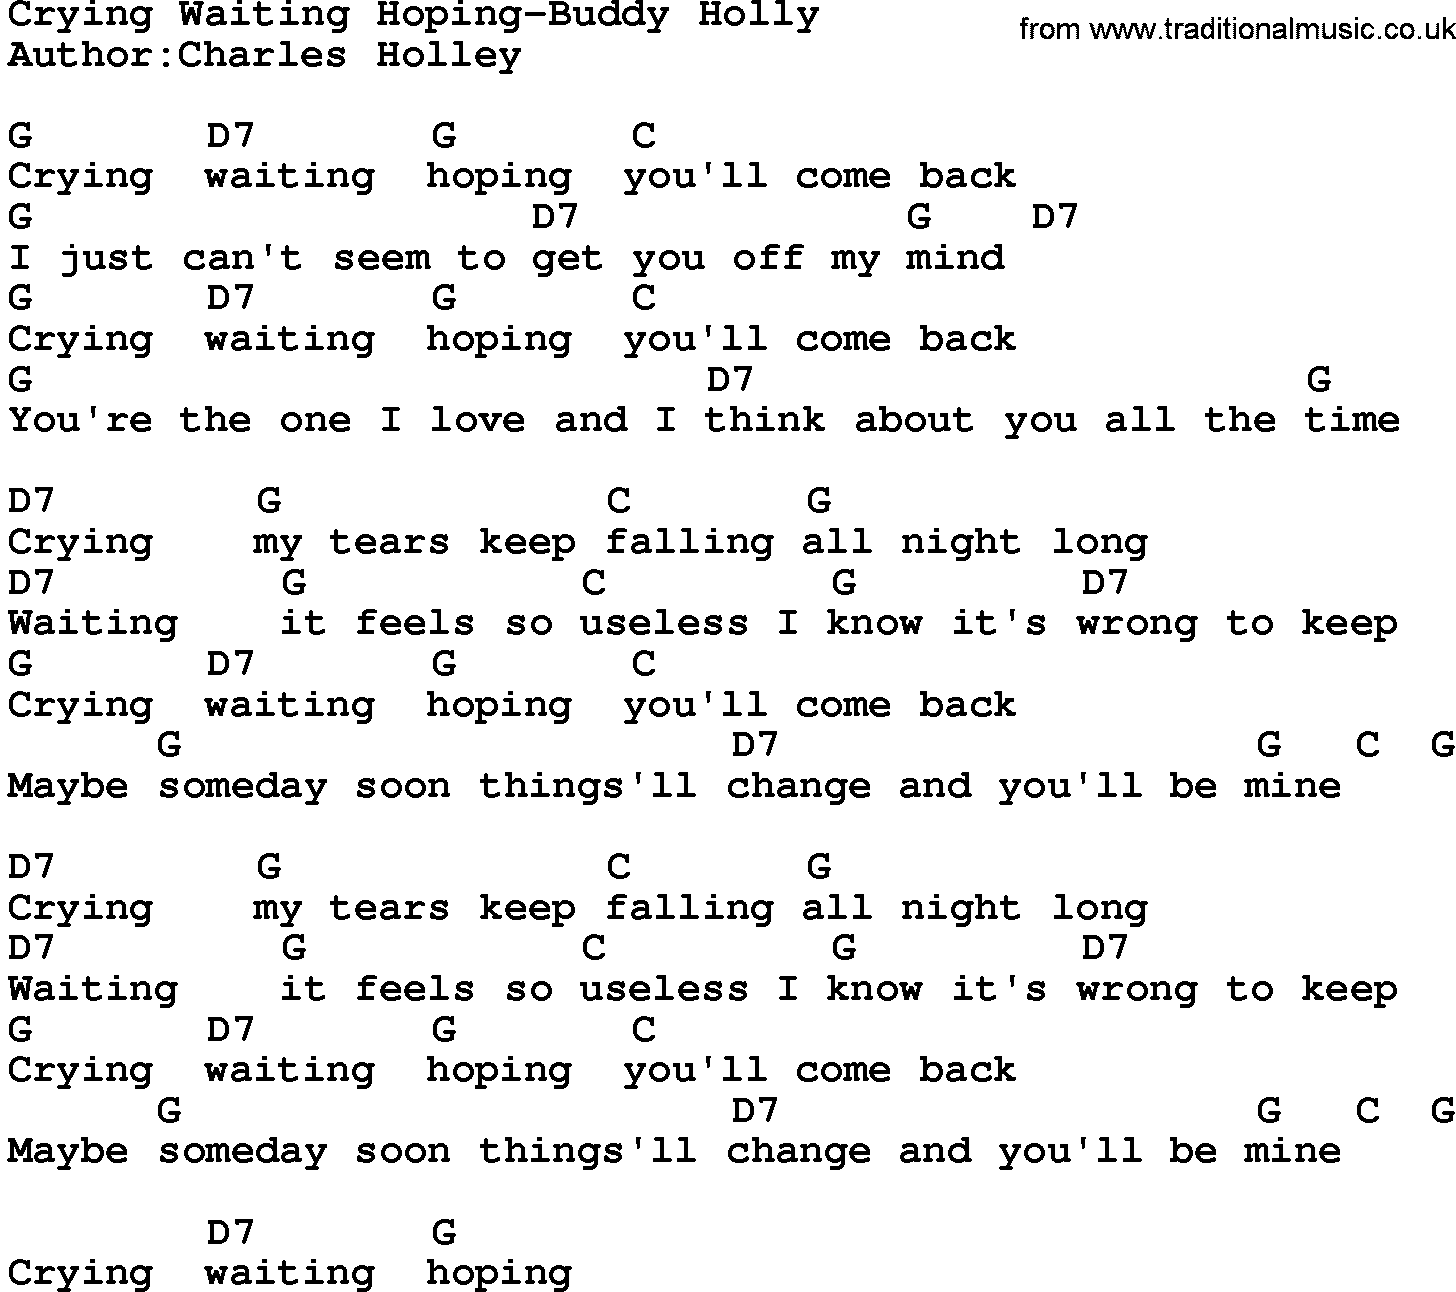 Country music song: Crying Waiting Hoping-Buddy Holly lyrics and chords